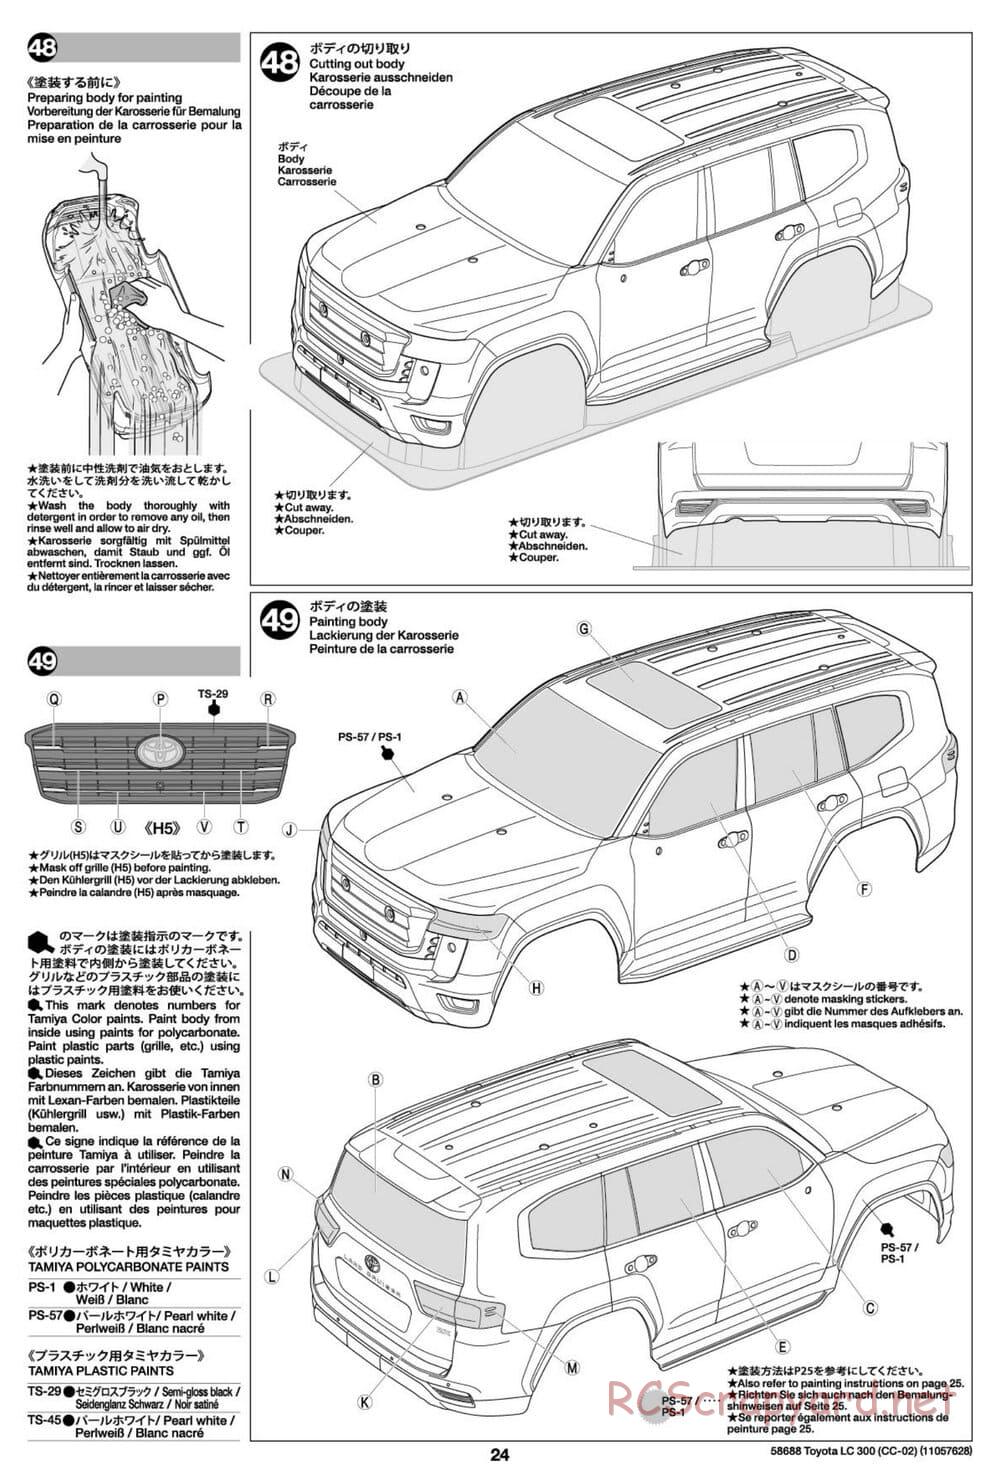 Tamiya - Toyota Land Cruiser 300 - CC-02 Chassis - Manual - Page 24